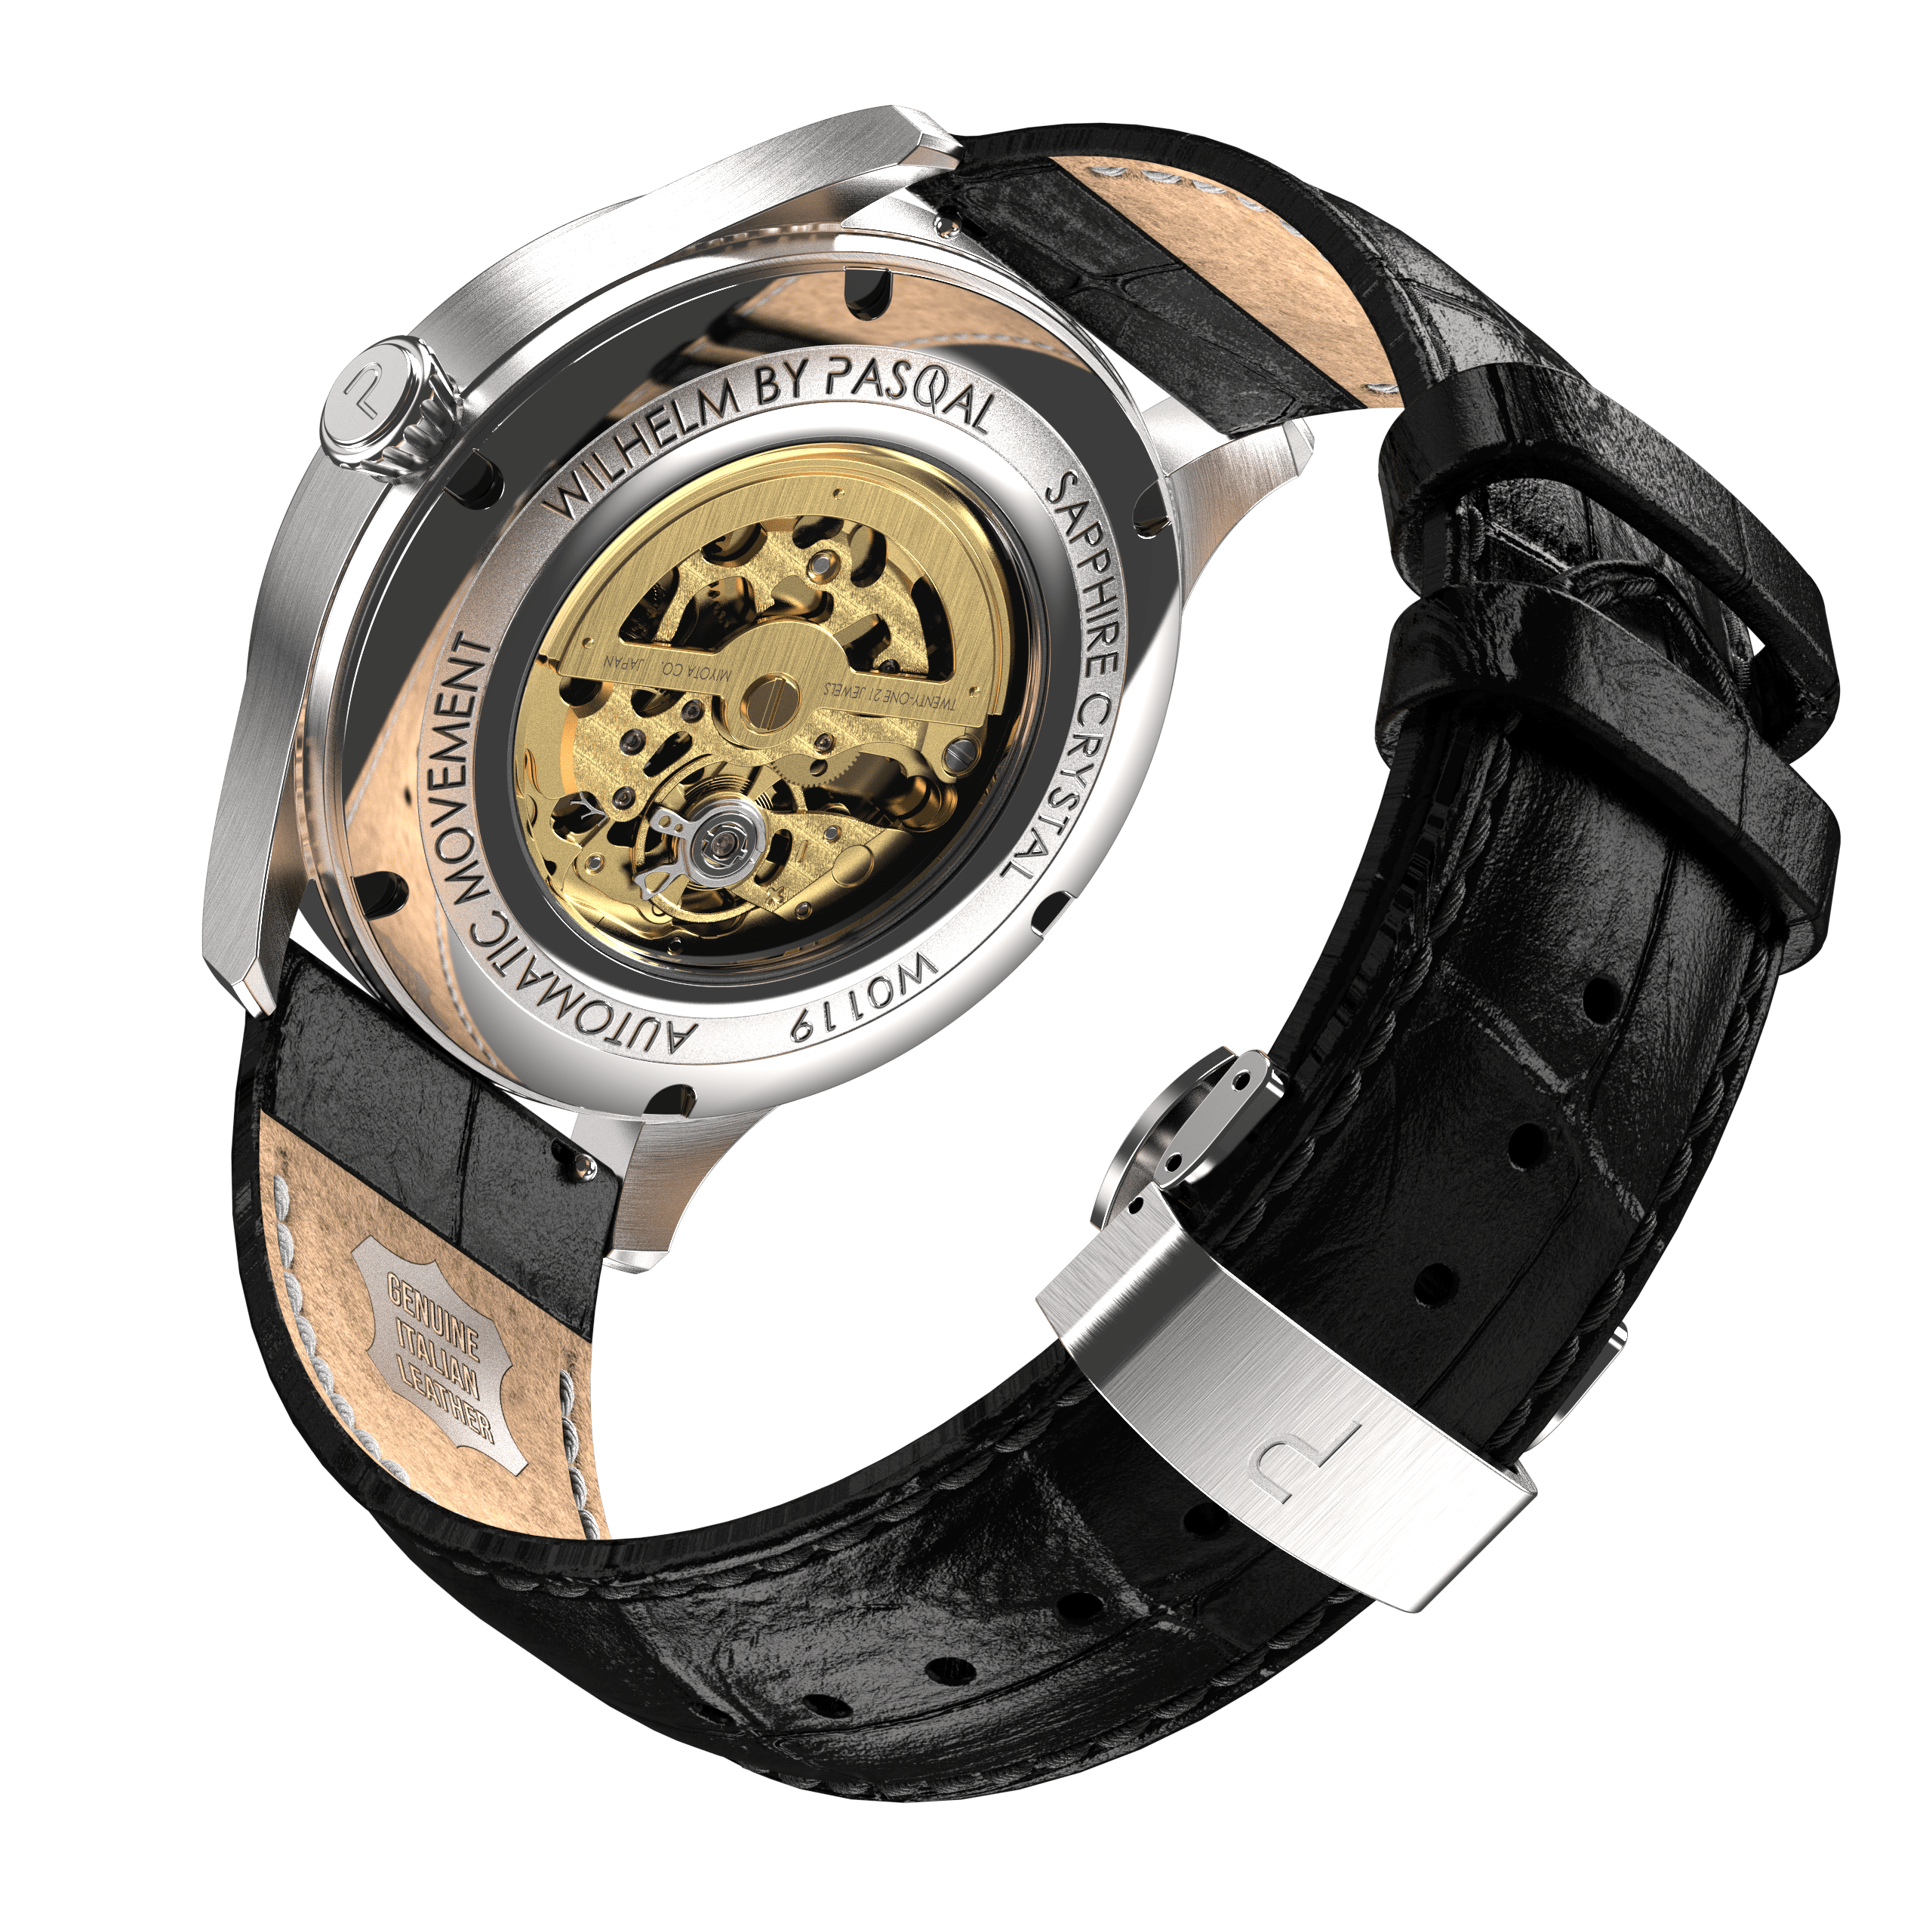 Wilhelm 42 Silver/Blue - Pasqal Watches